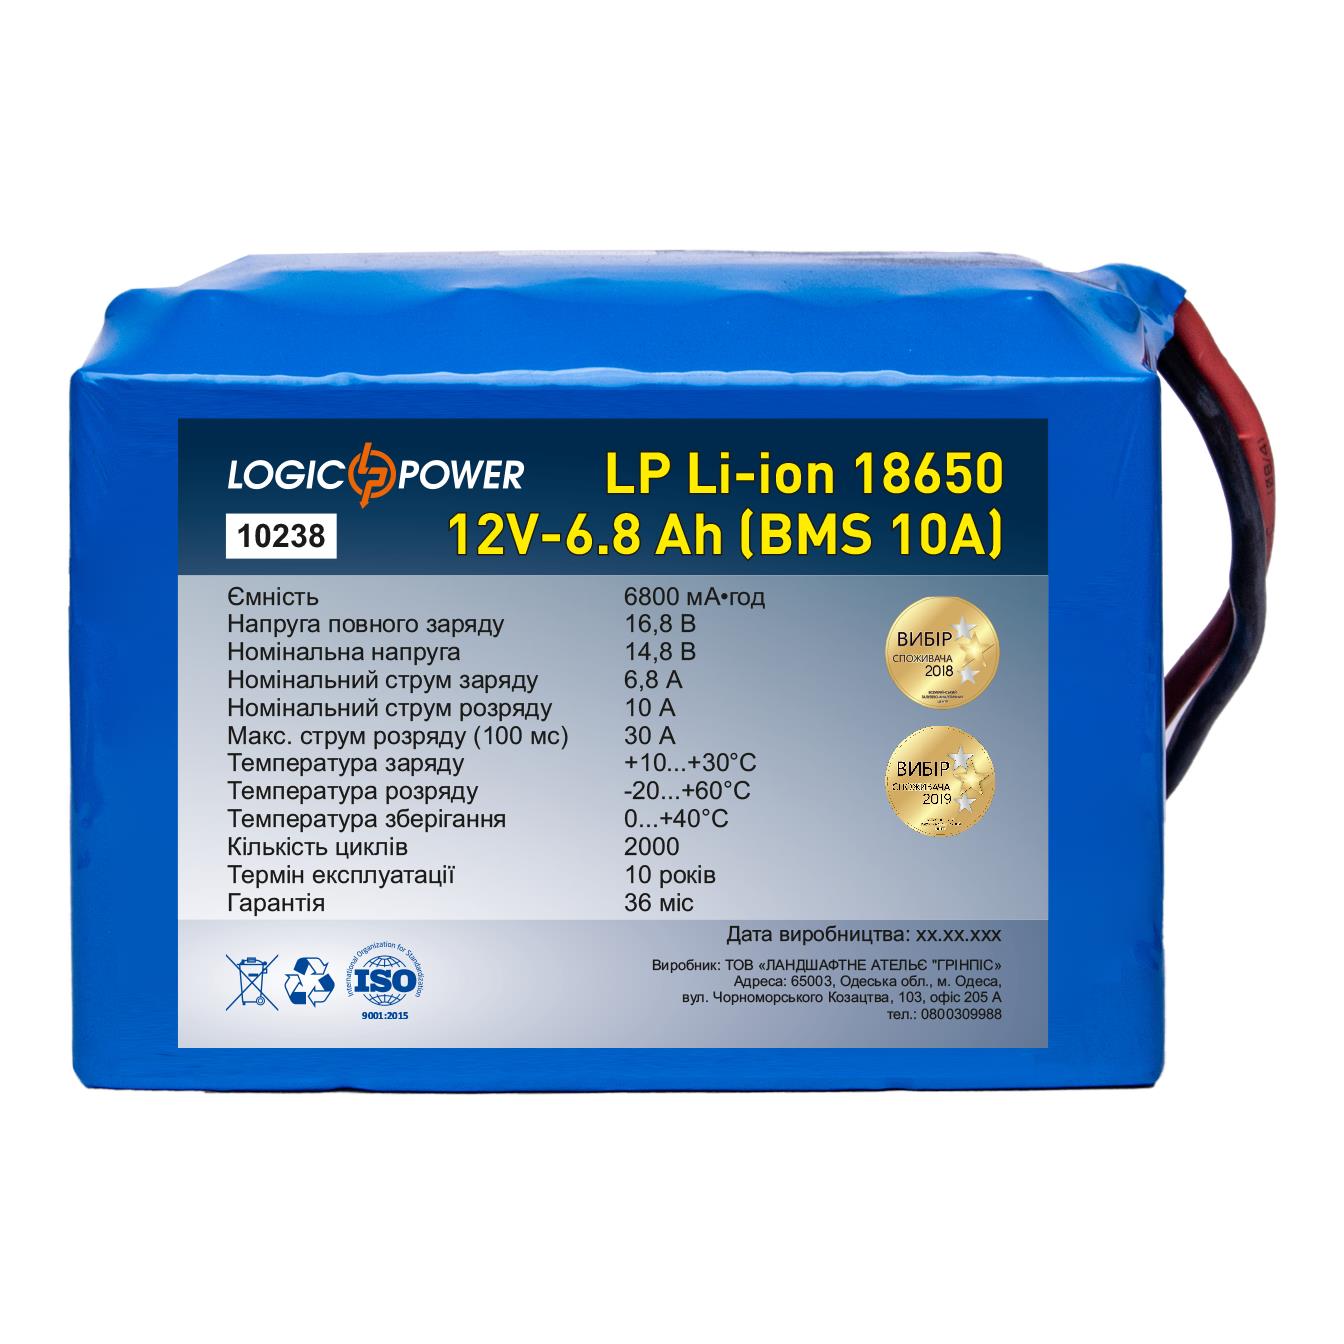 Аккумулятор литий-ионный LogicPower LP Li-ion 18650 12V - 6.8 Ah (BMS 10A) (10238)